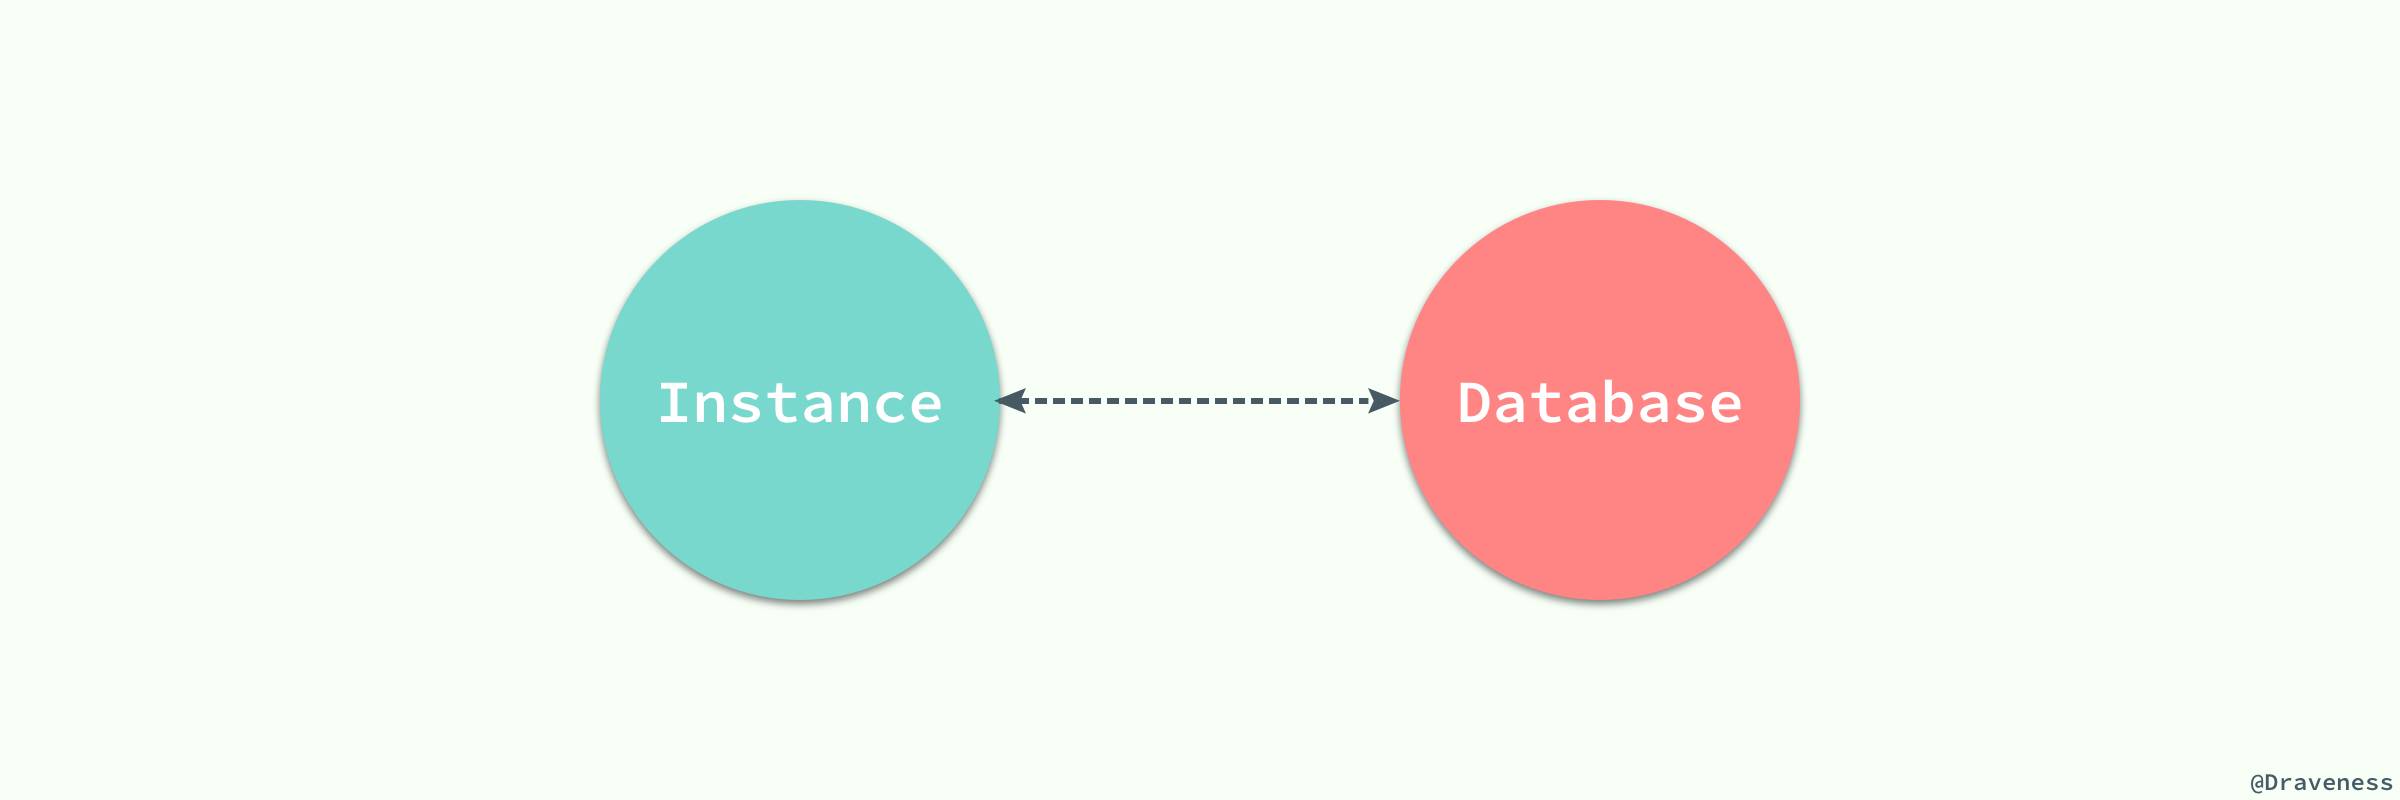 Database - Instance